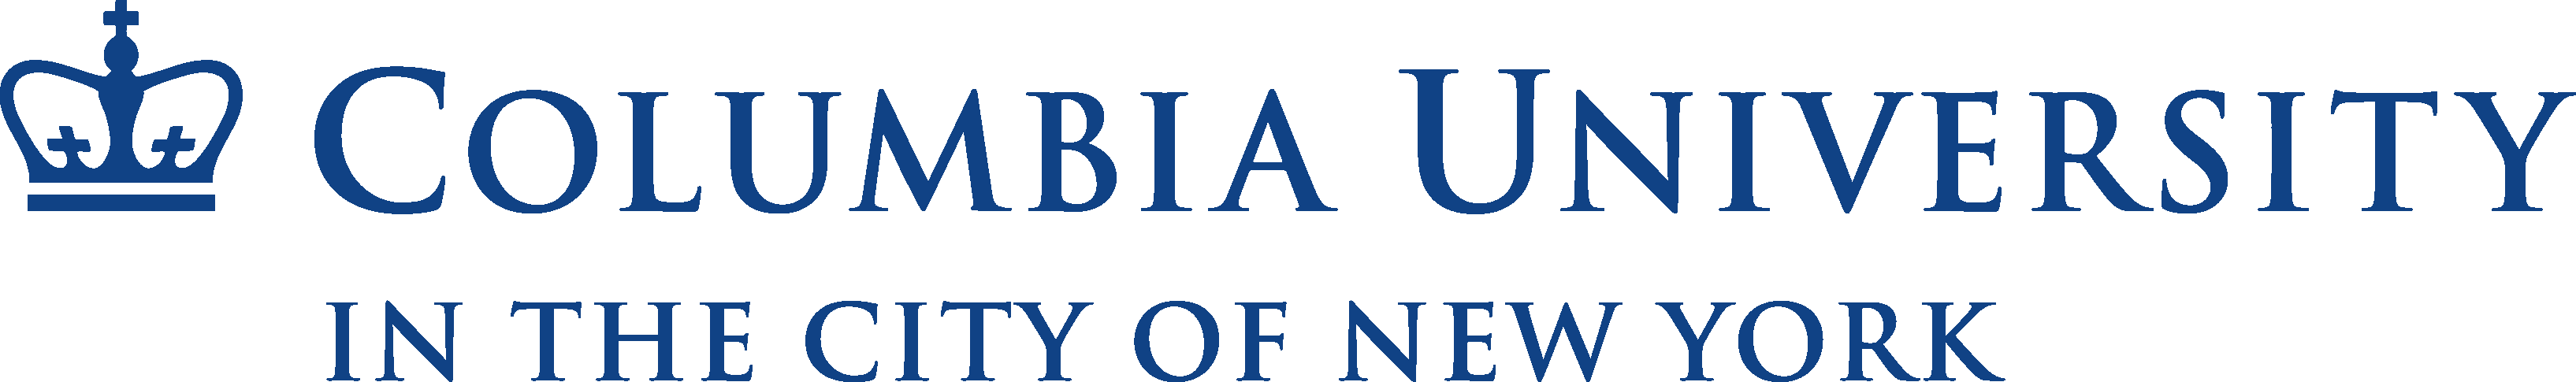 columbia video network graduate program columbia university logo 129781